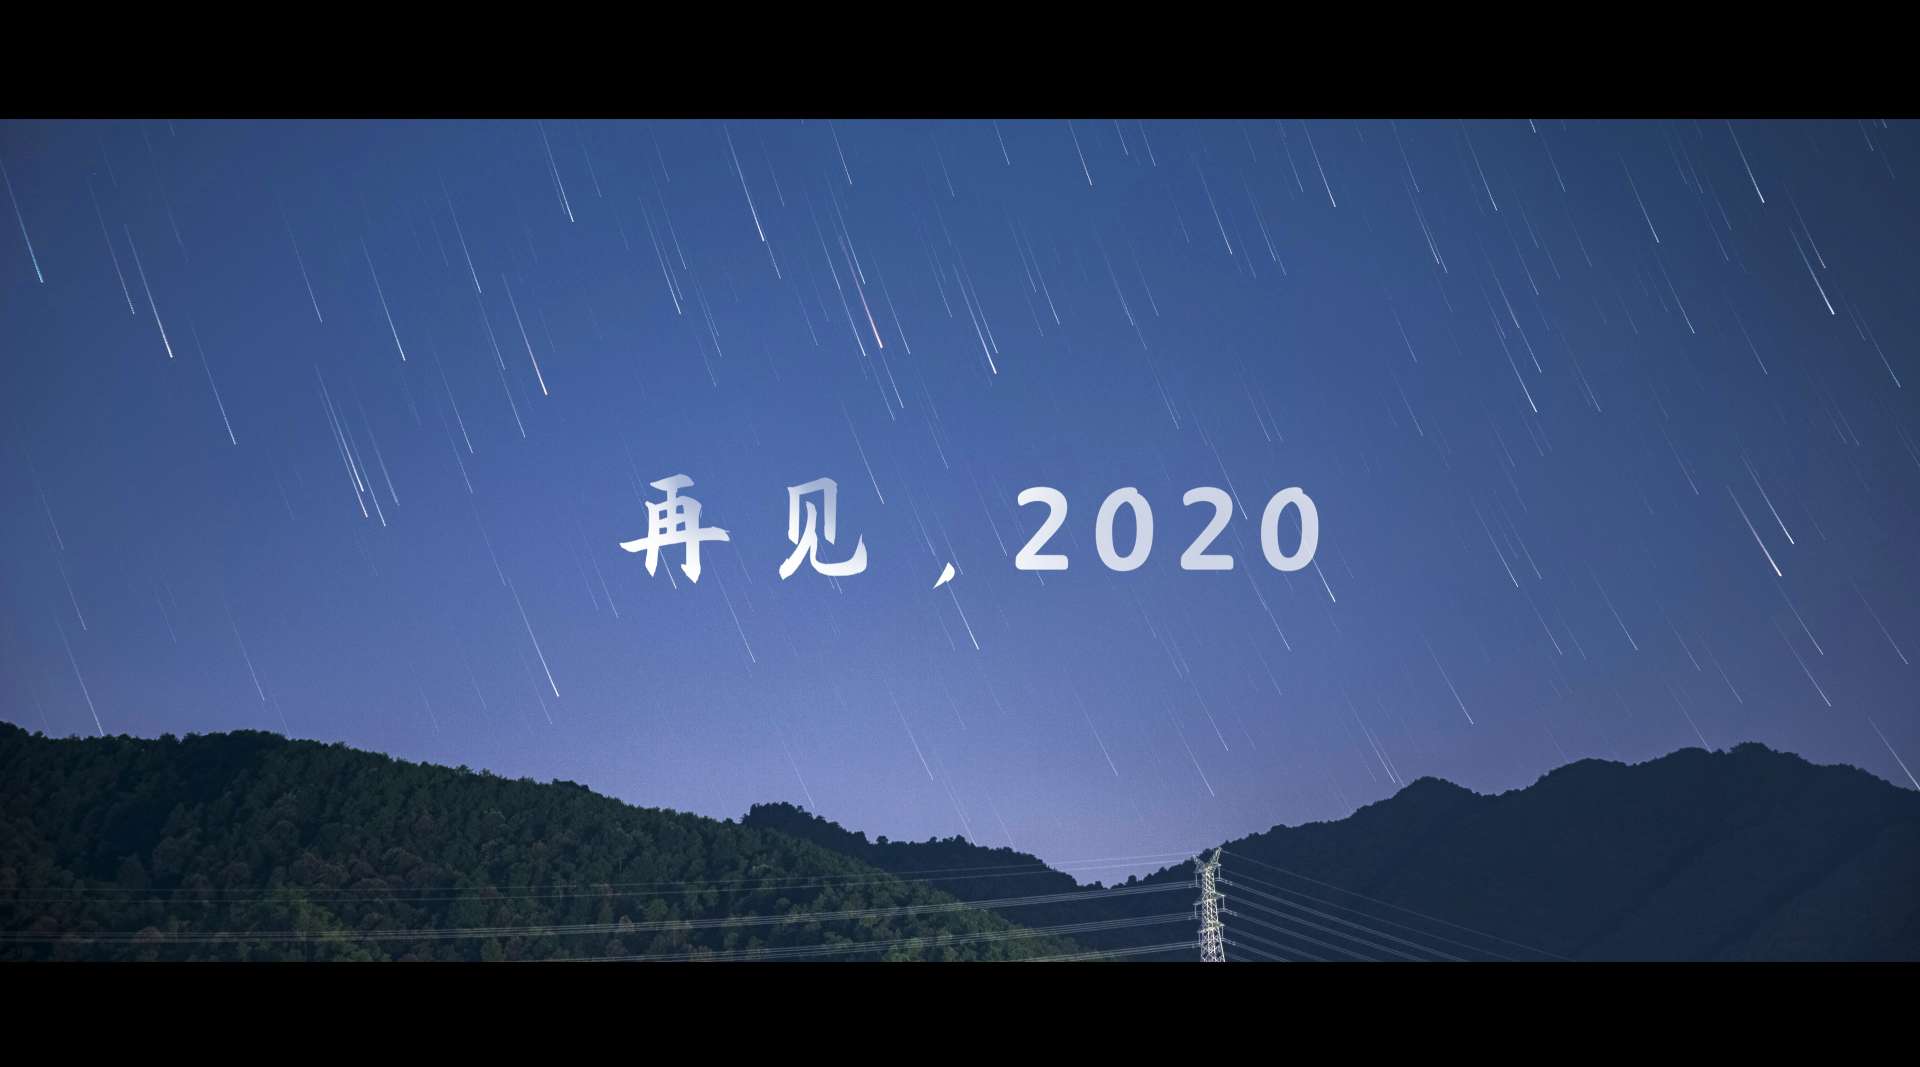 BYE 2020